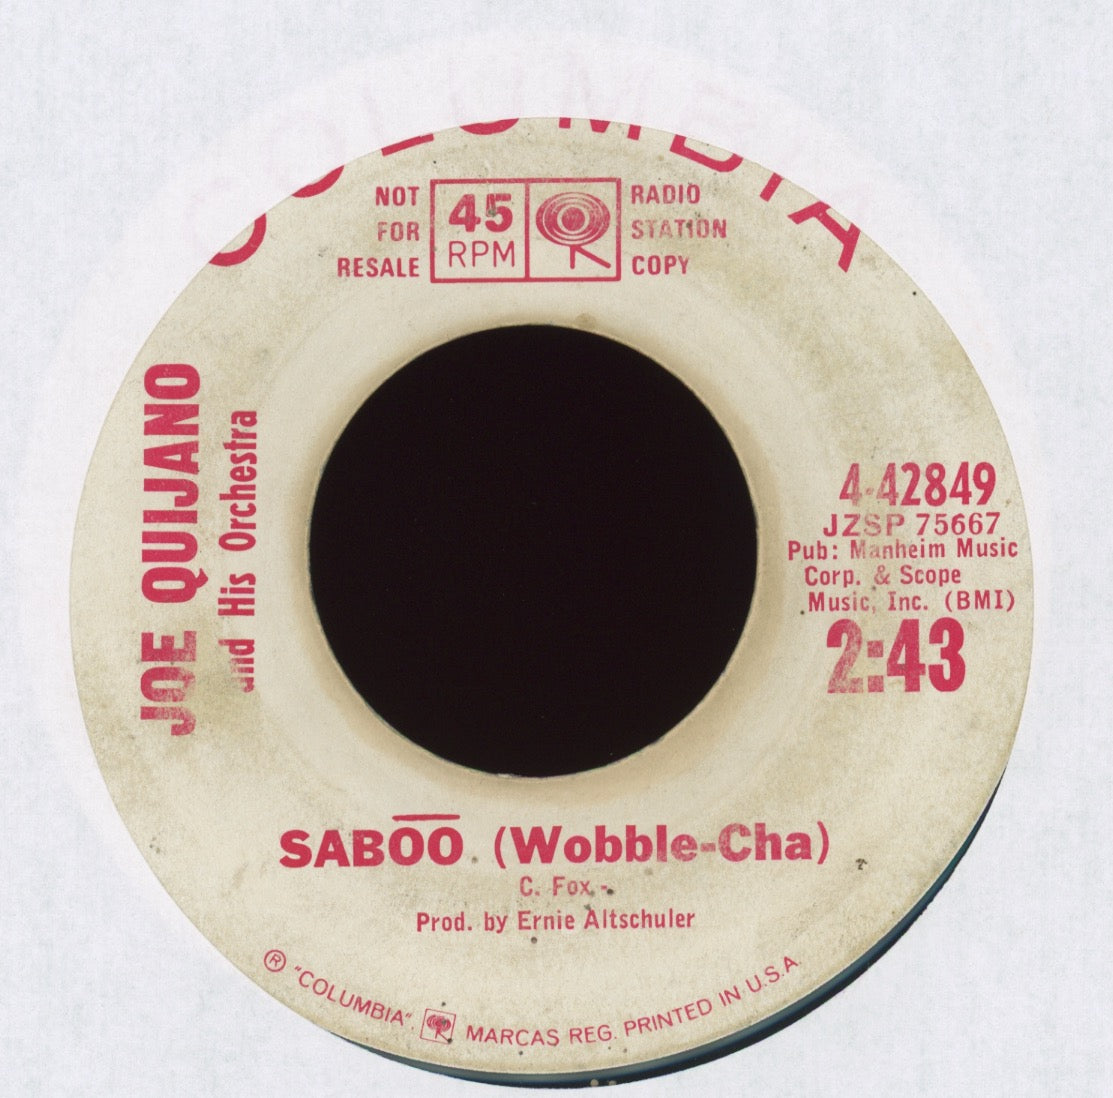 Joe Quijano Y Su Orquesta - Saboo (wobble-cha) on Columbia Promo